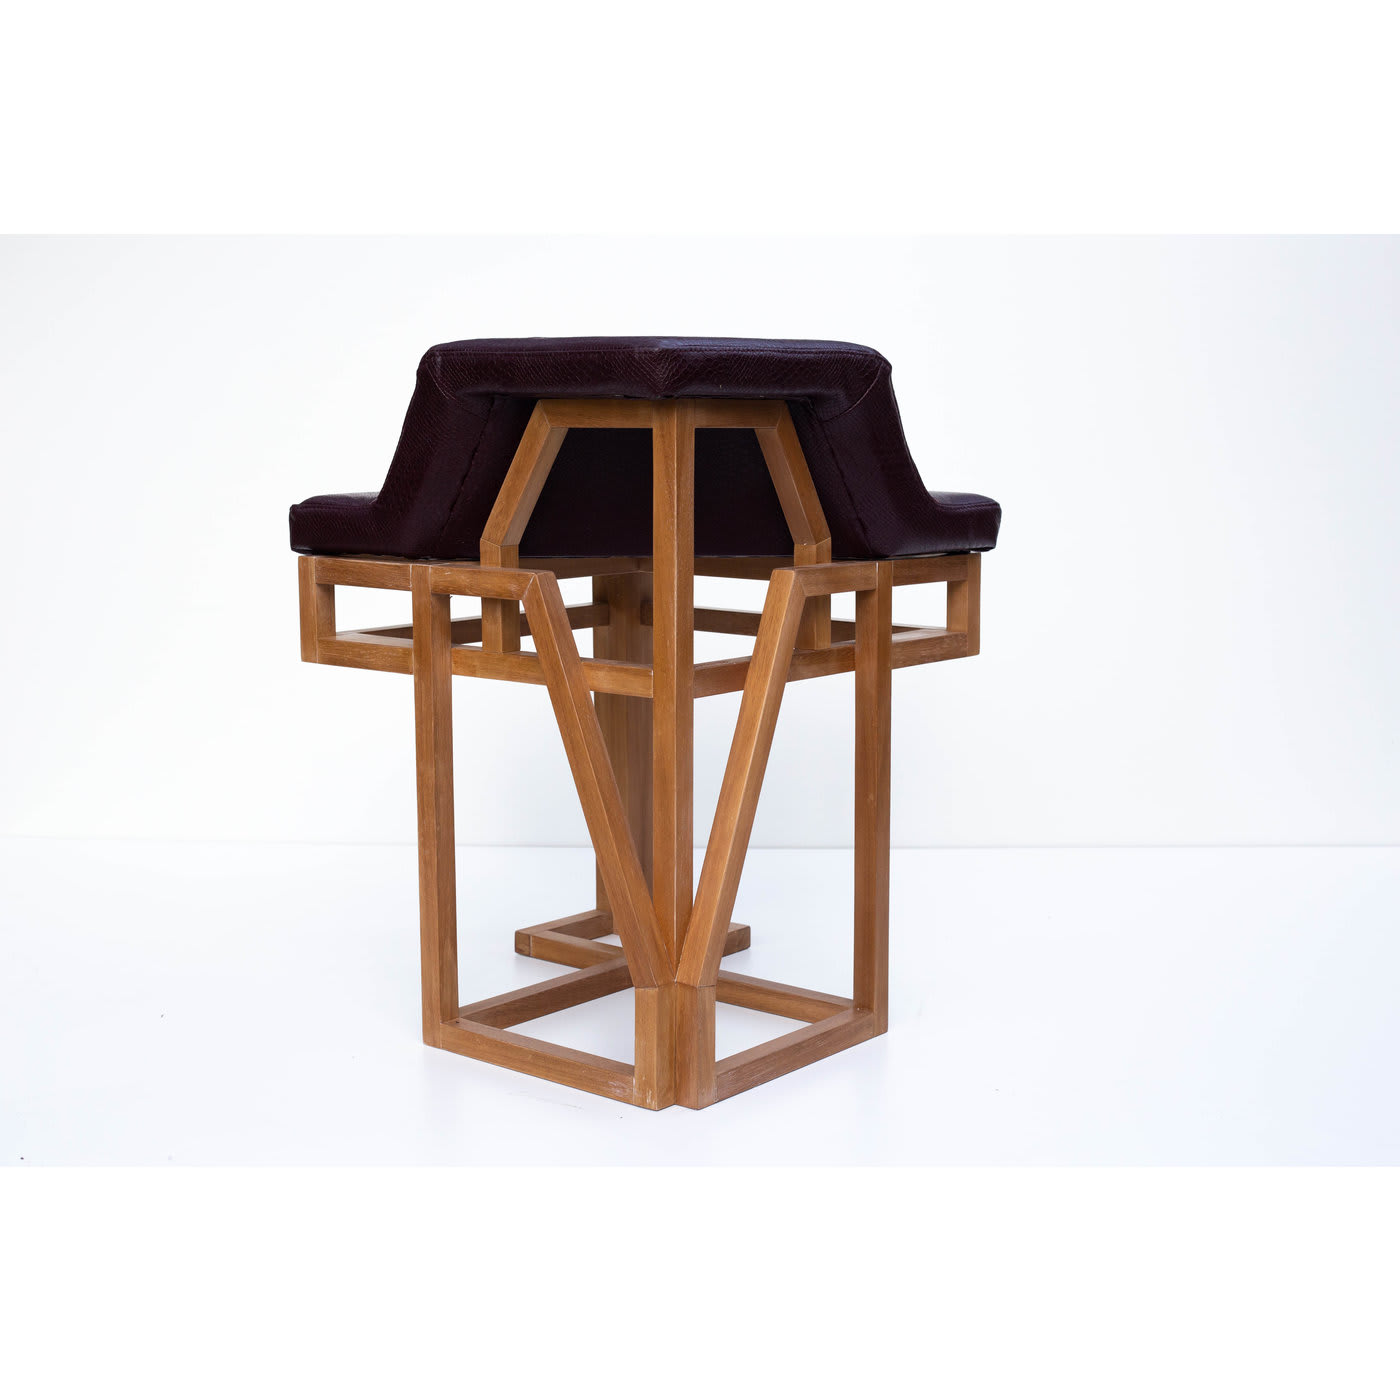 Millis Dark Brown Chair - M.A.V. Style